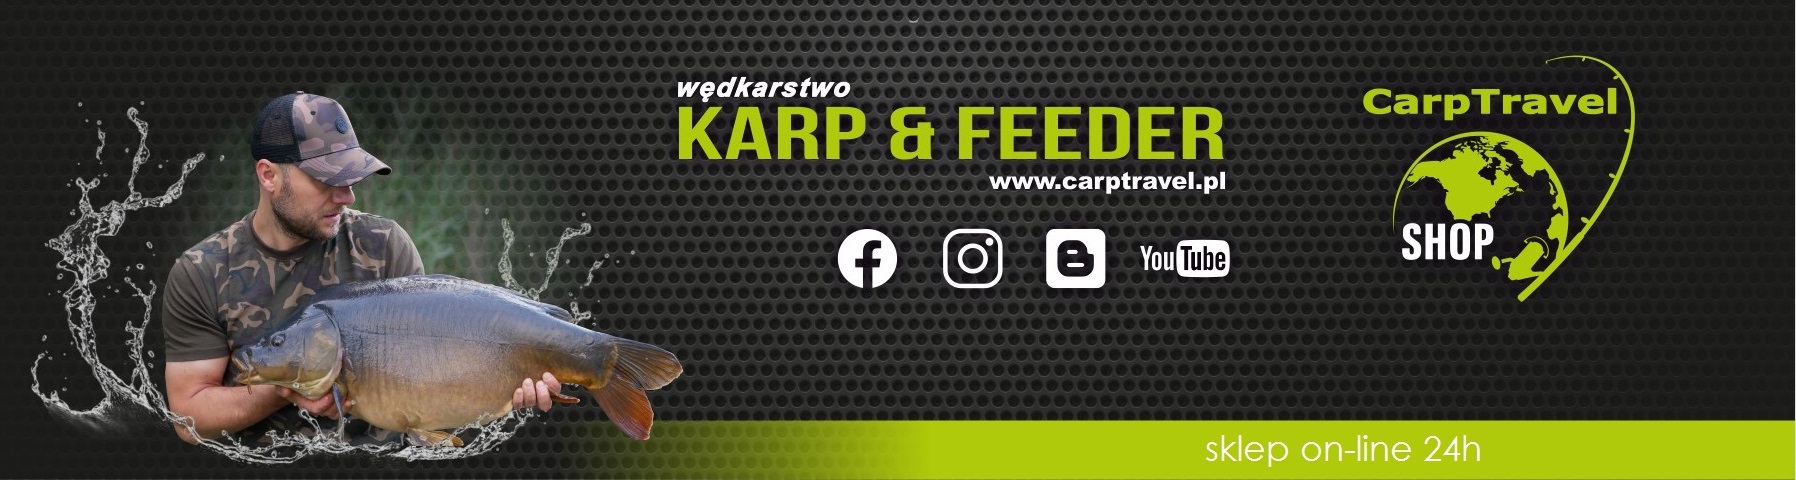 CarpTravel - Karp & Feeder sklep